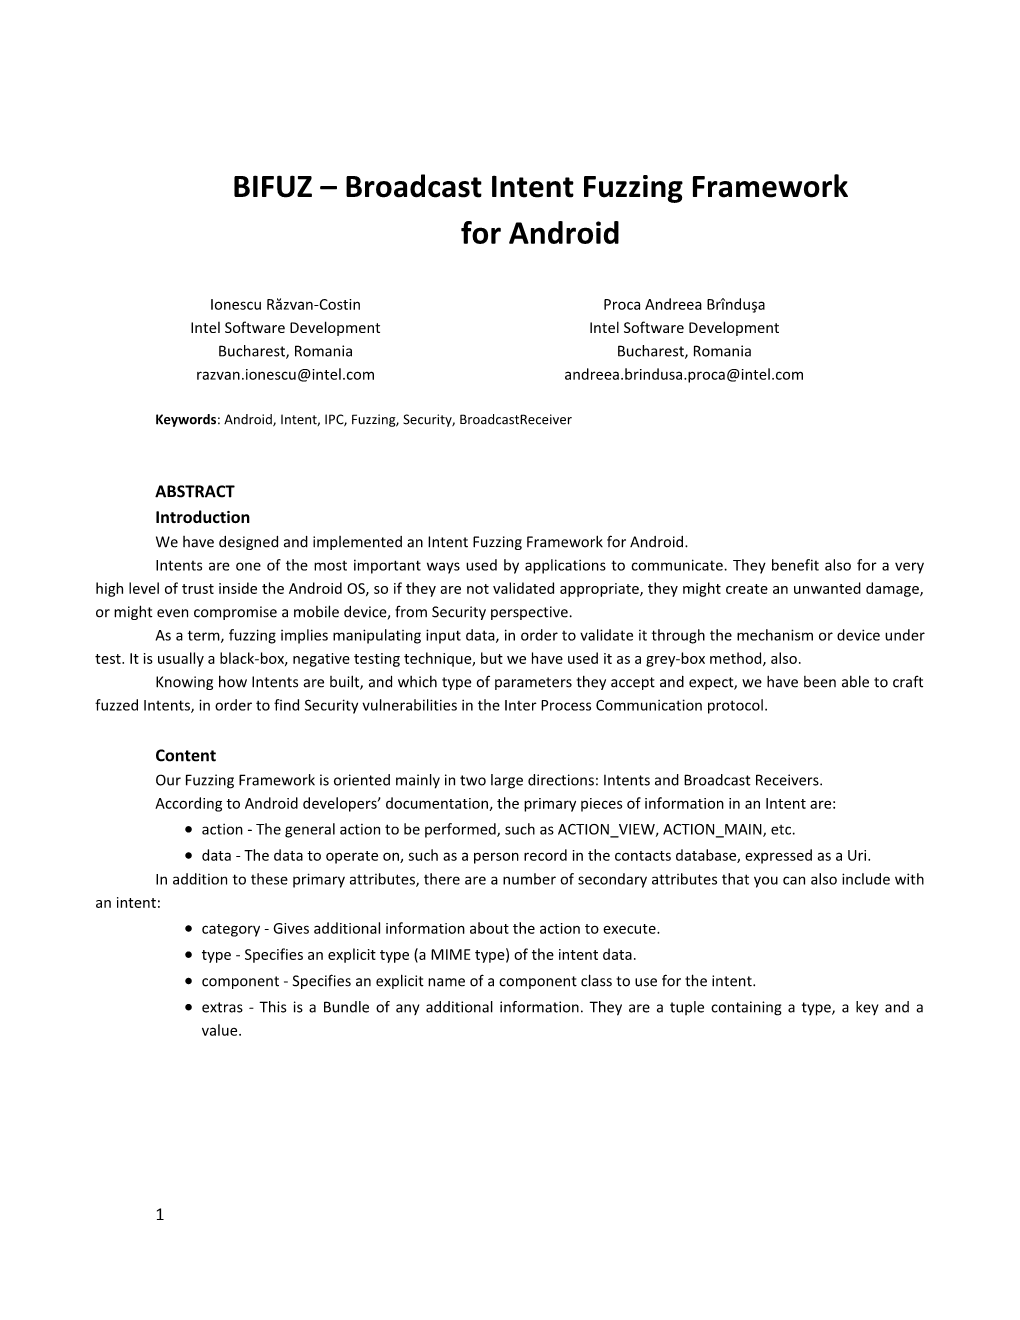 BIFUZ Broadcast Intent Fuzzing Framework